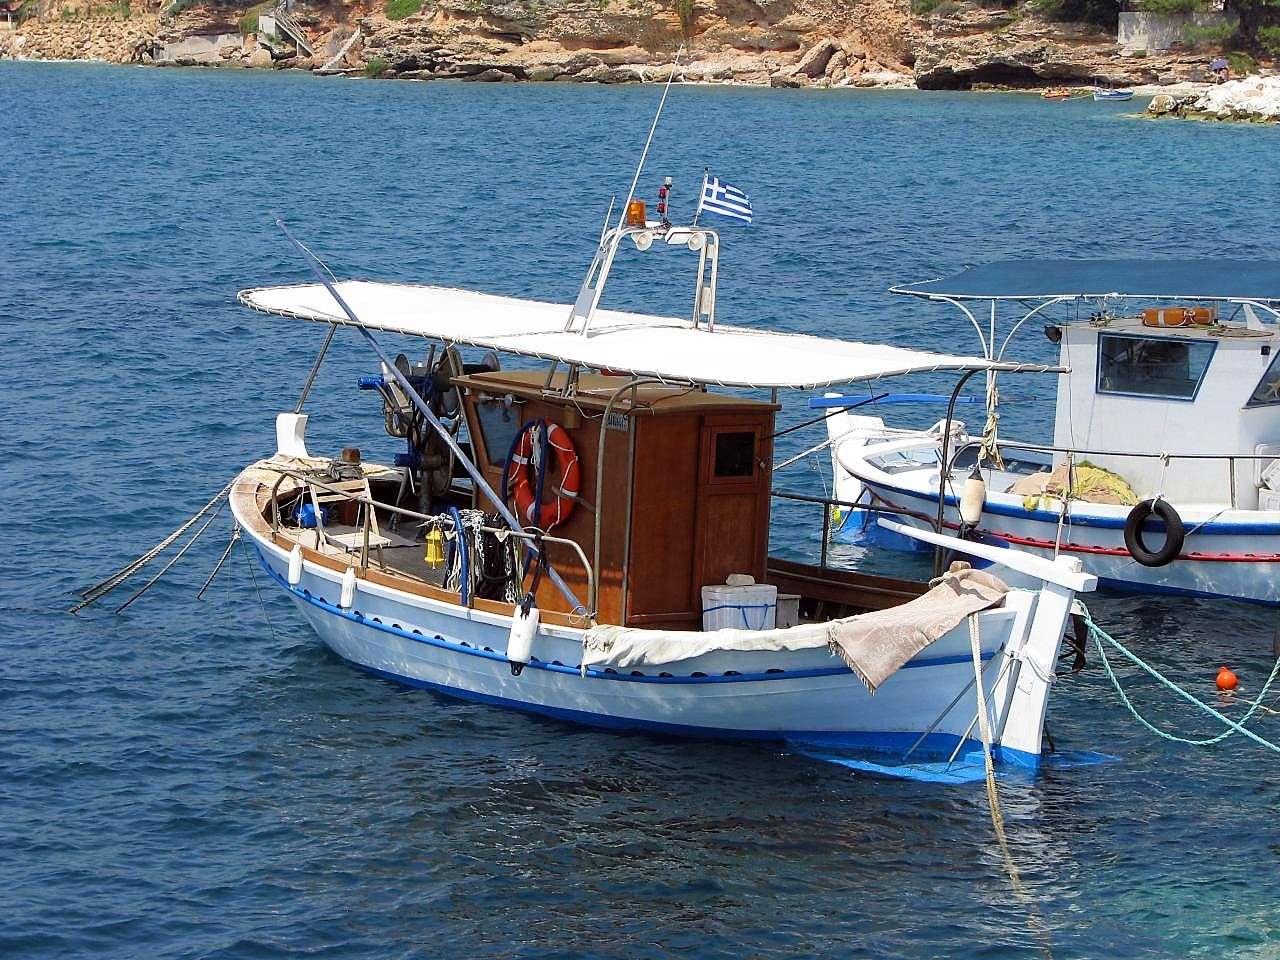 Thasos Greek Island. puzzle online